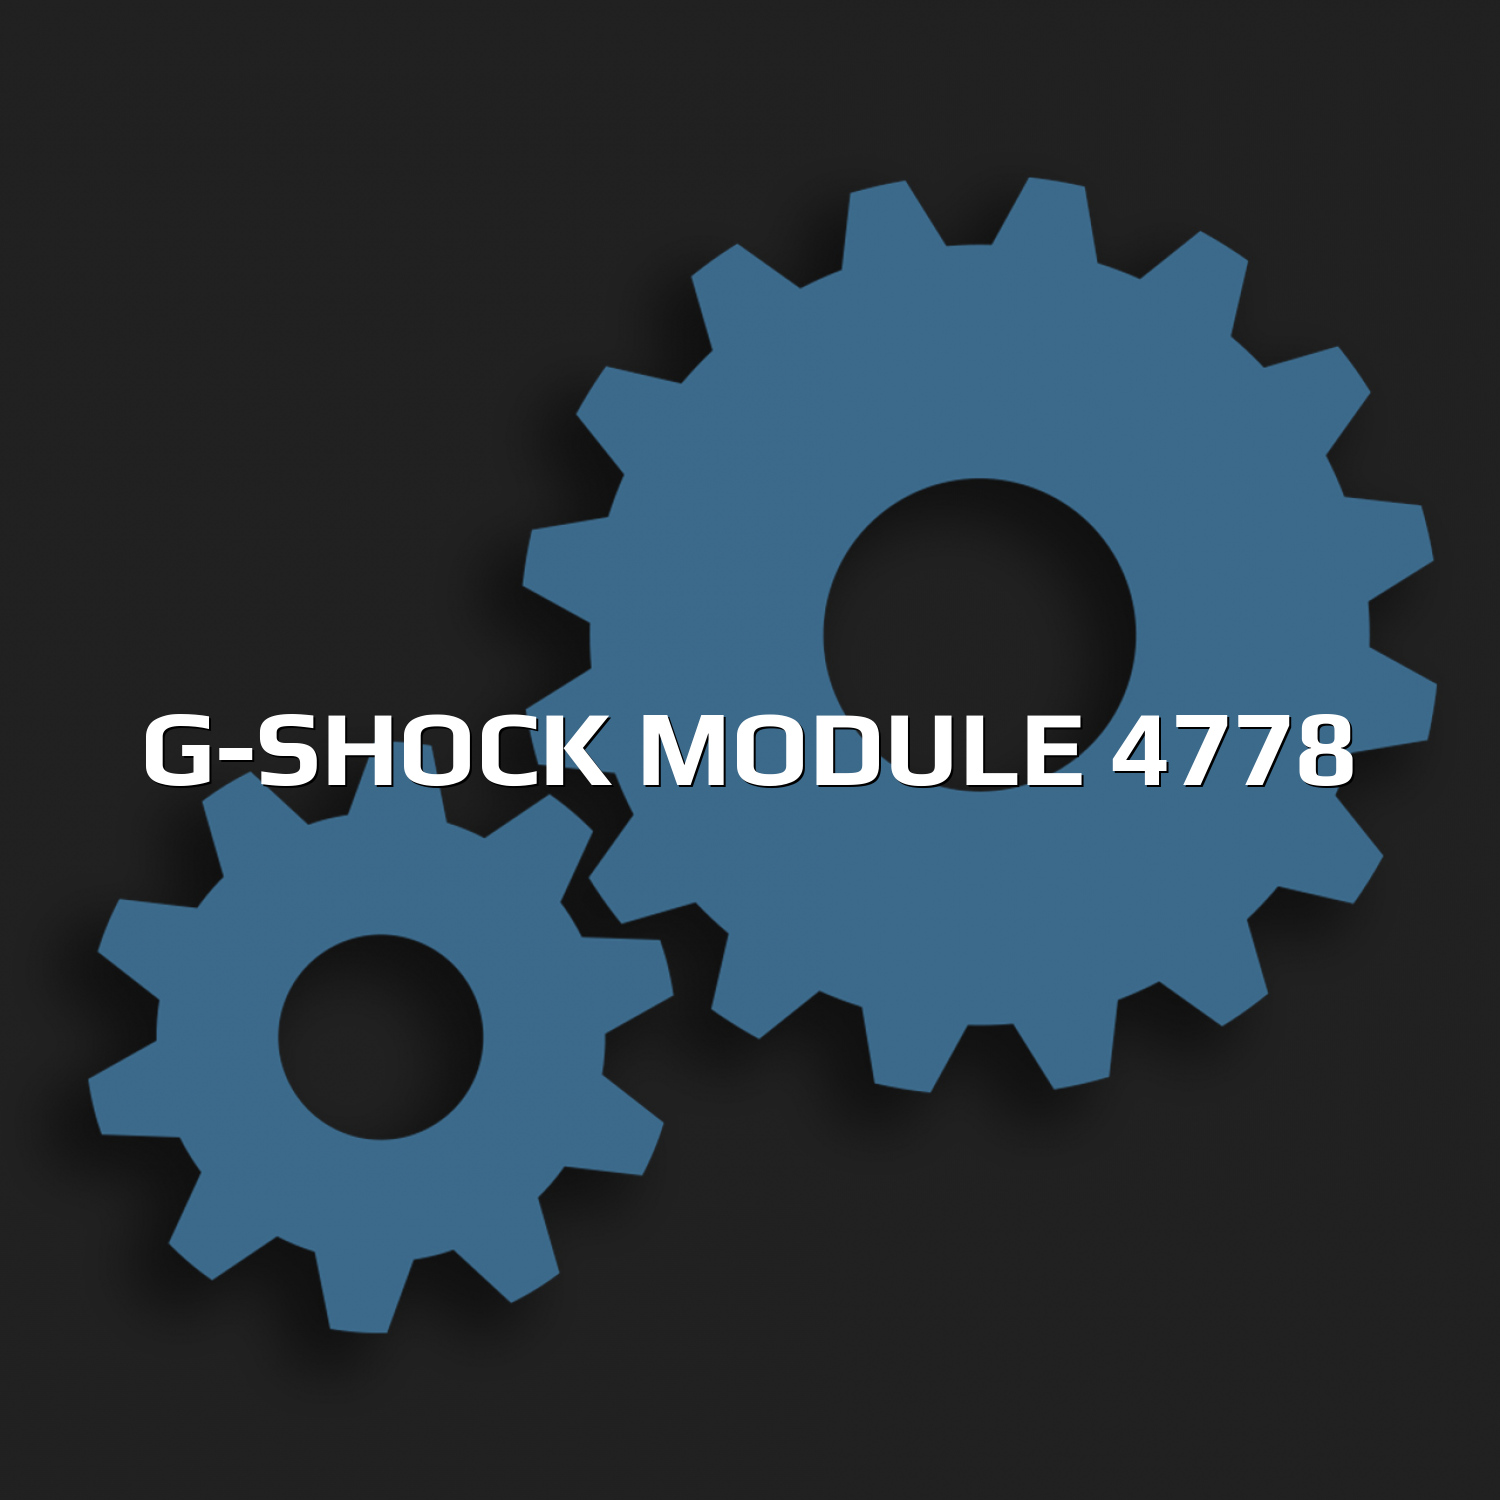 G-Shock Module 4778